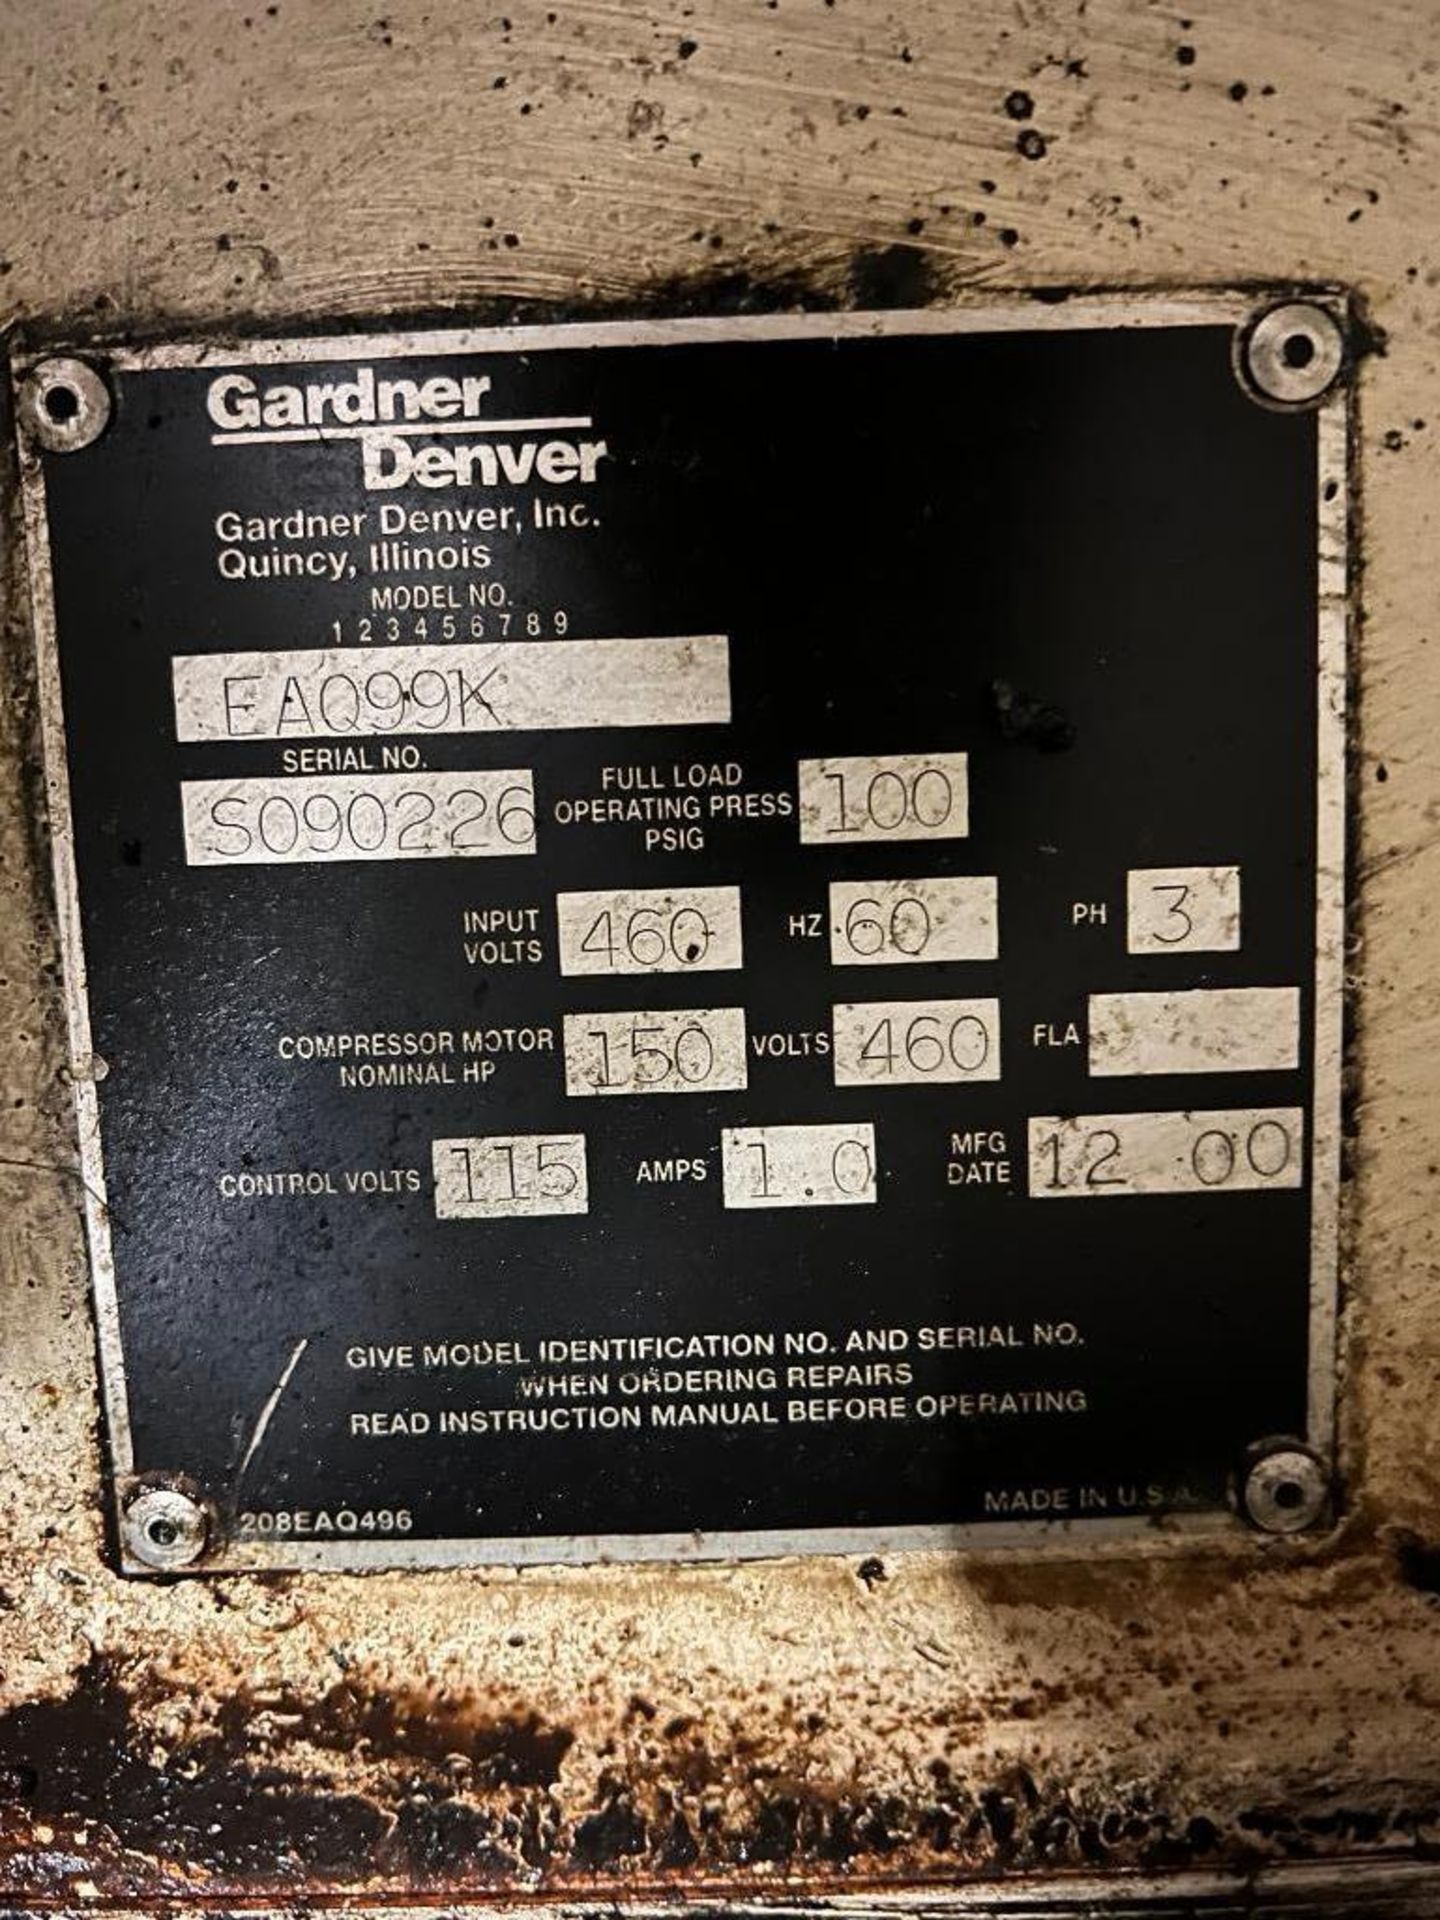 Gardner Denver Electra Saver EA099K Rotary Screw Air Compressor, 150-HP, 100-PSI, Auto Sentry ES Con - Image 5 of 6